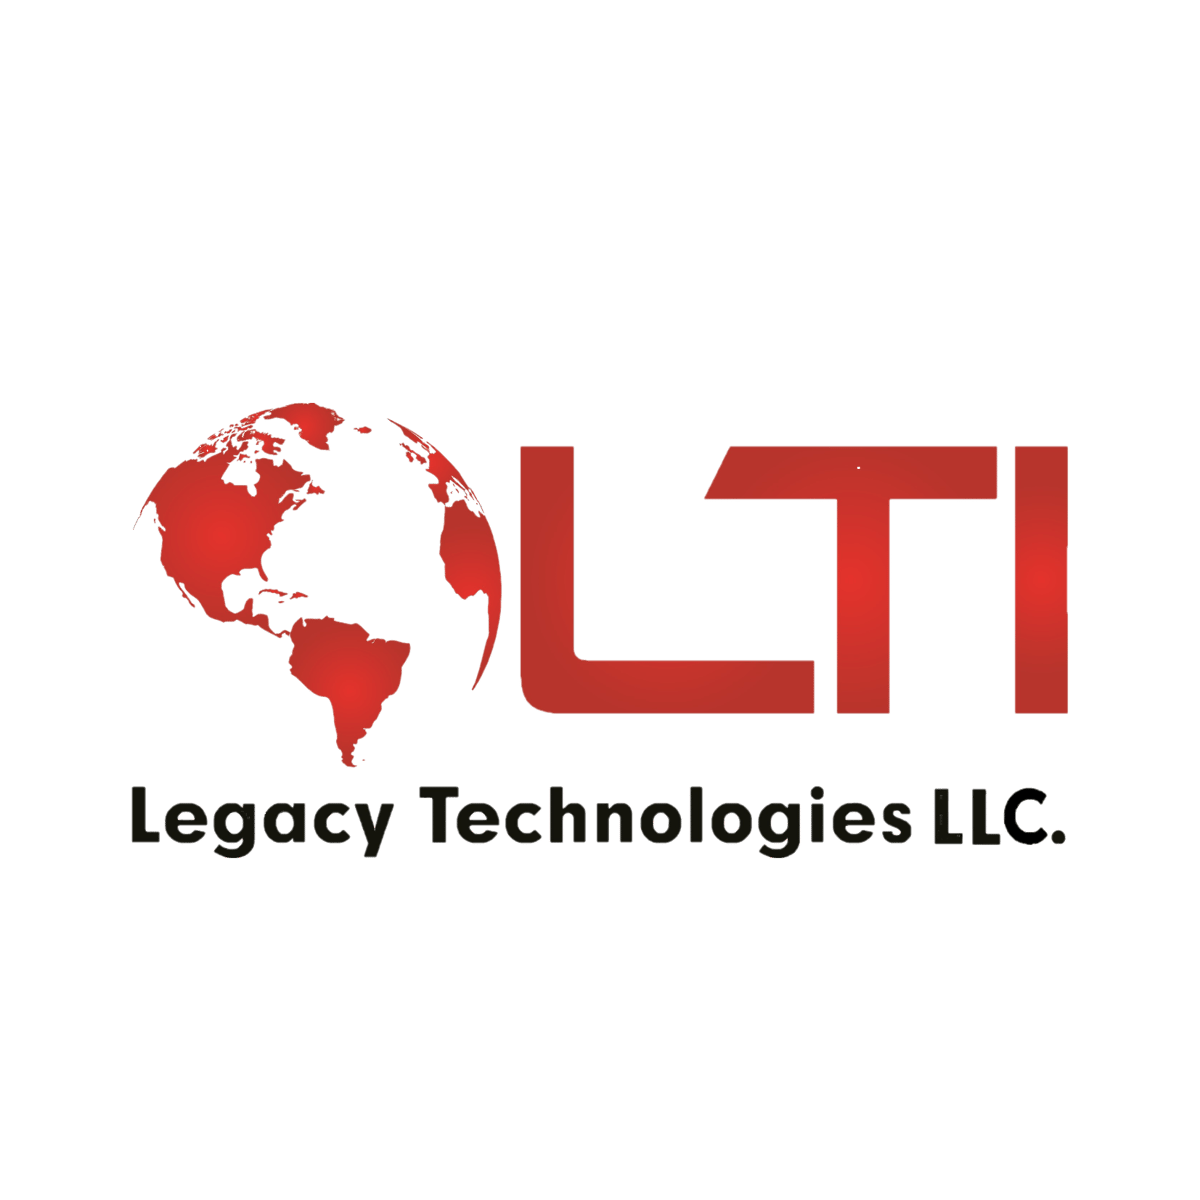 (c) Legacytechnologies.com